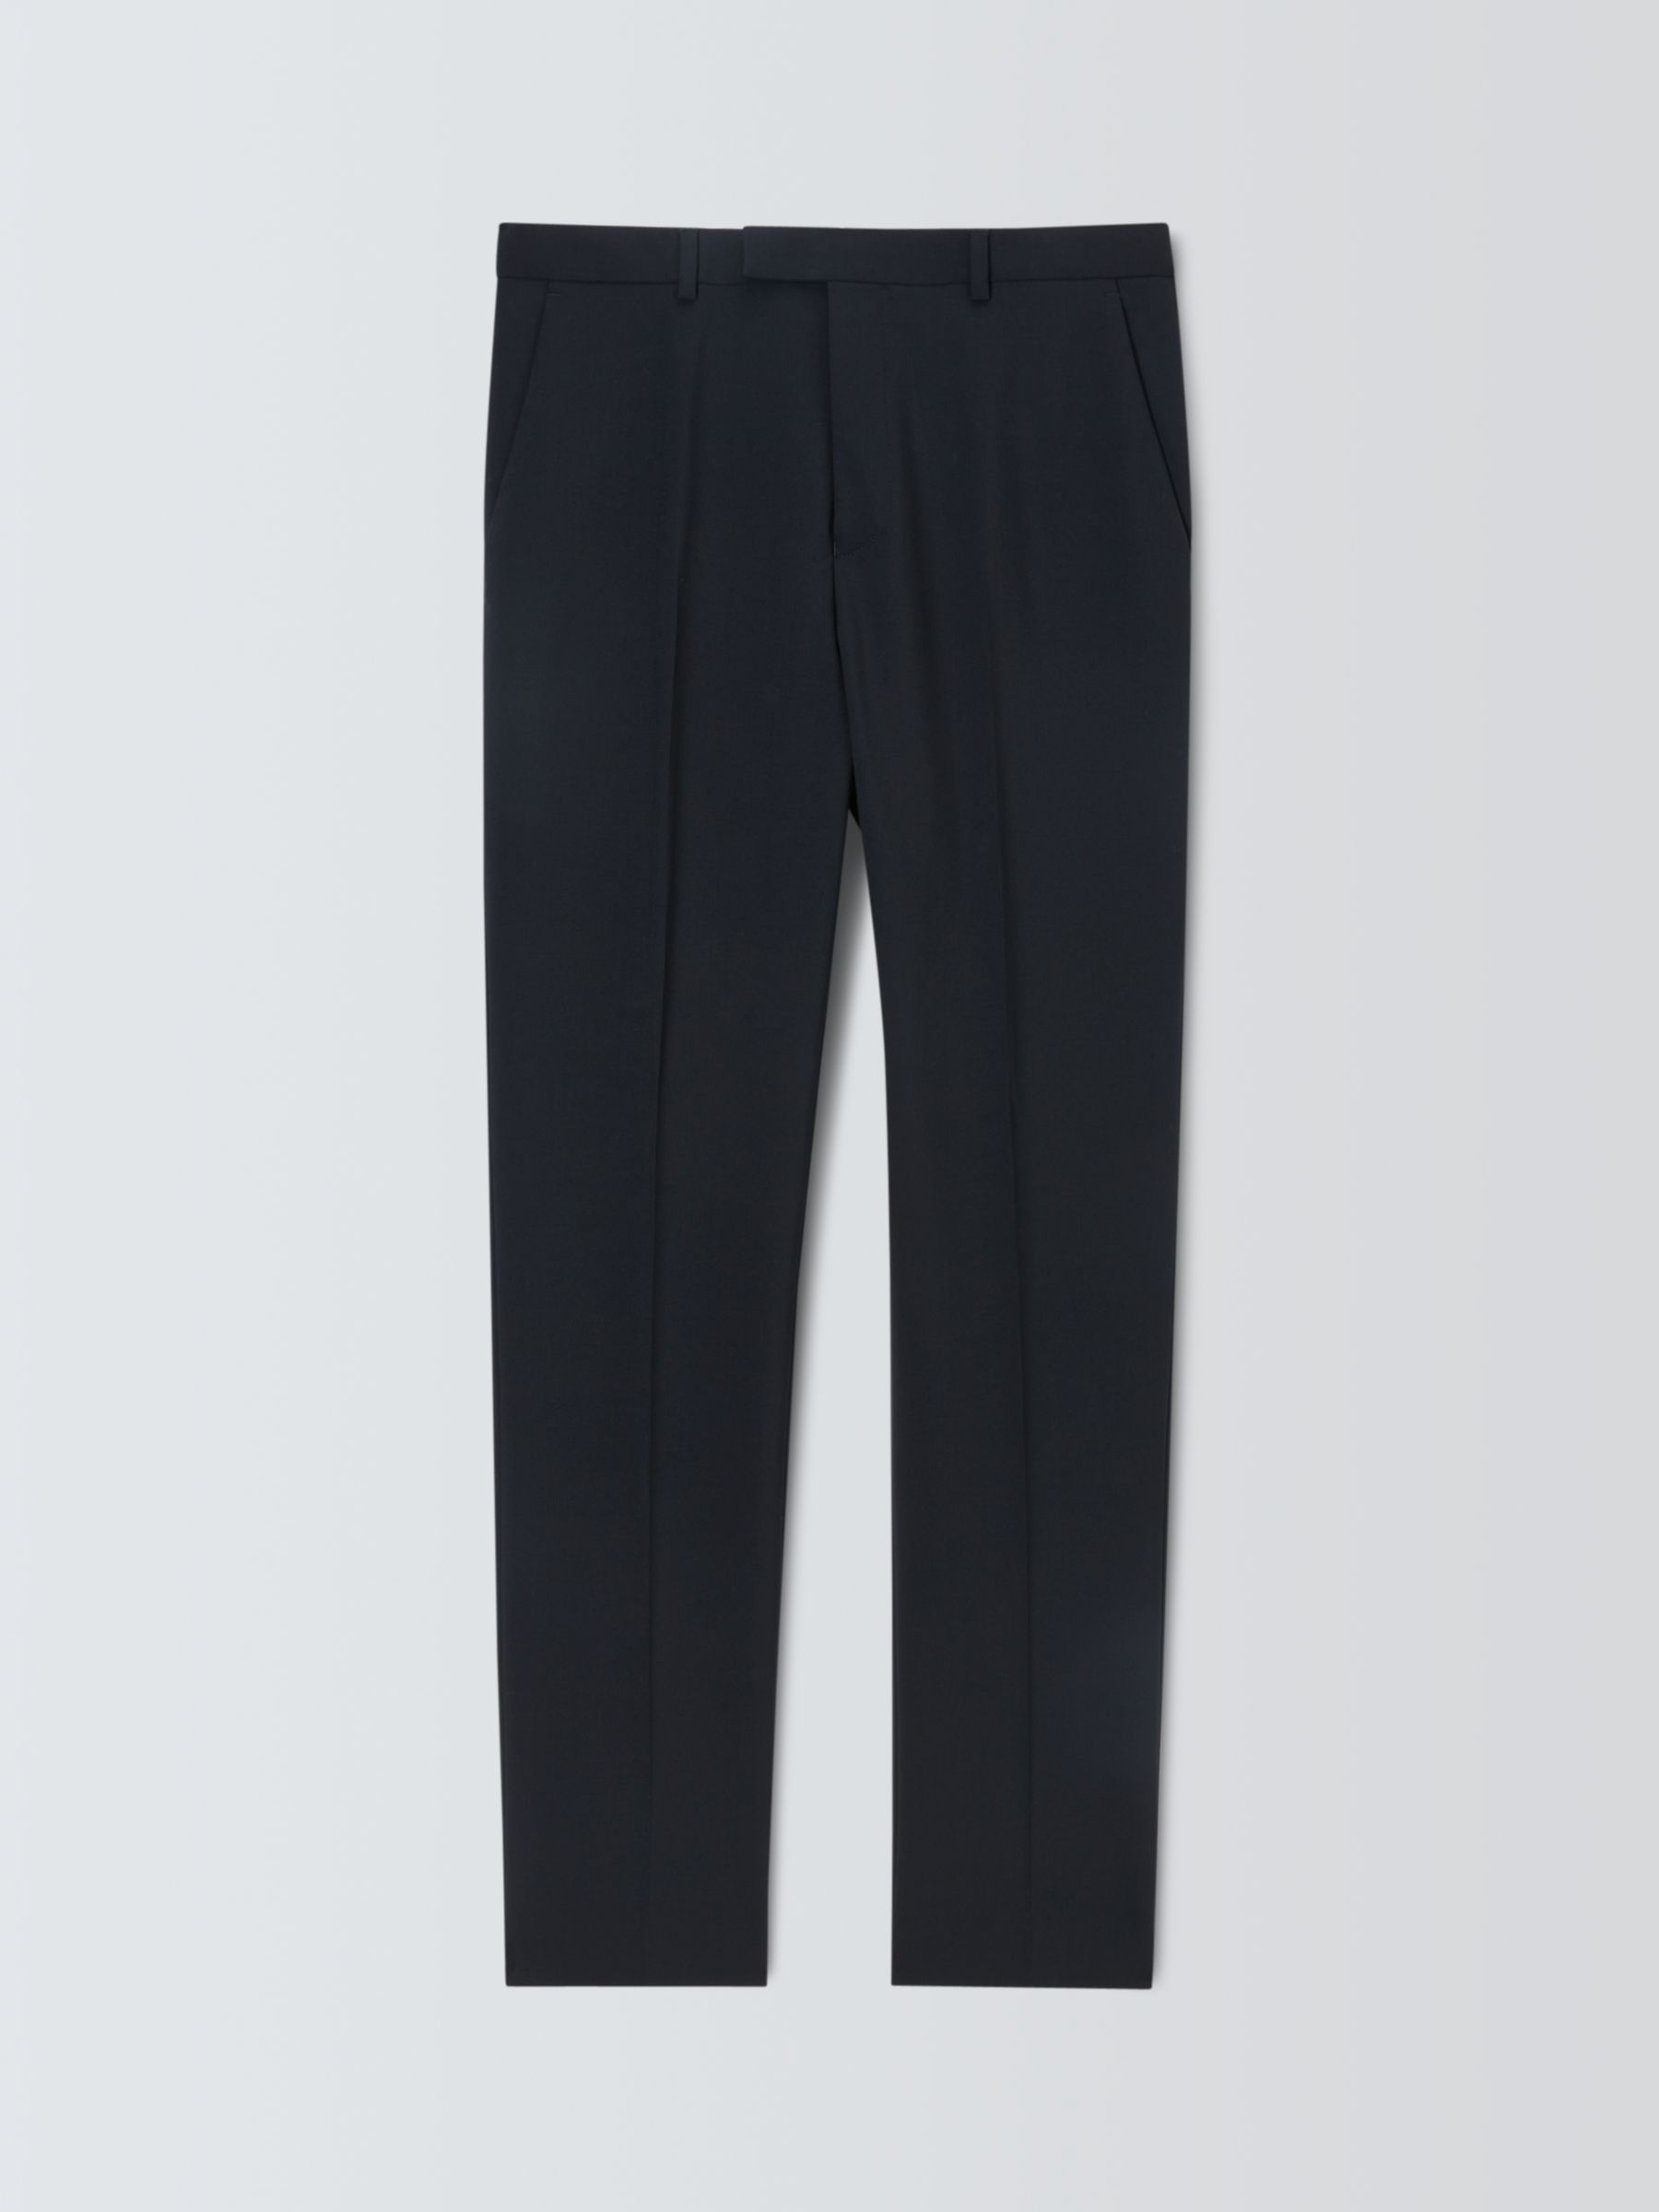 Kin Wool Blend Slim Fit Suit Trousers, Navy at John Lewis & Partners